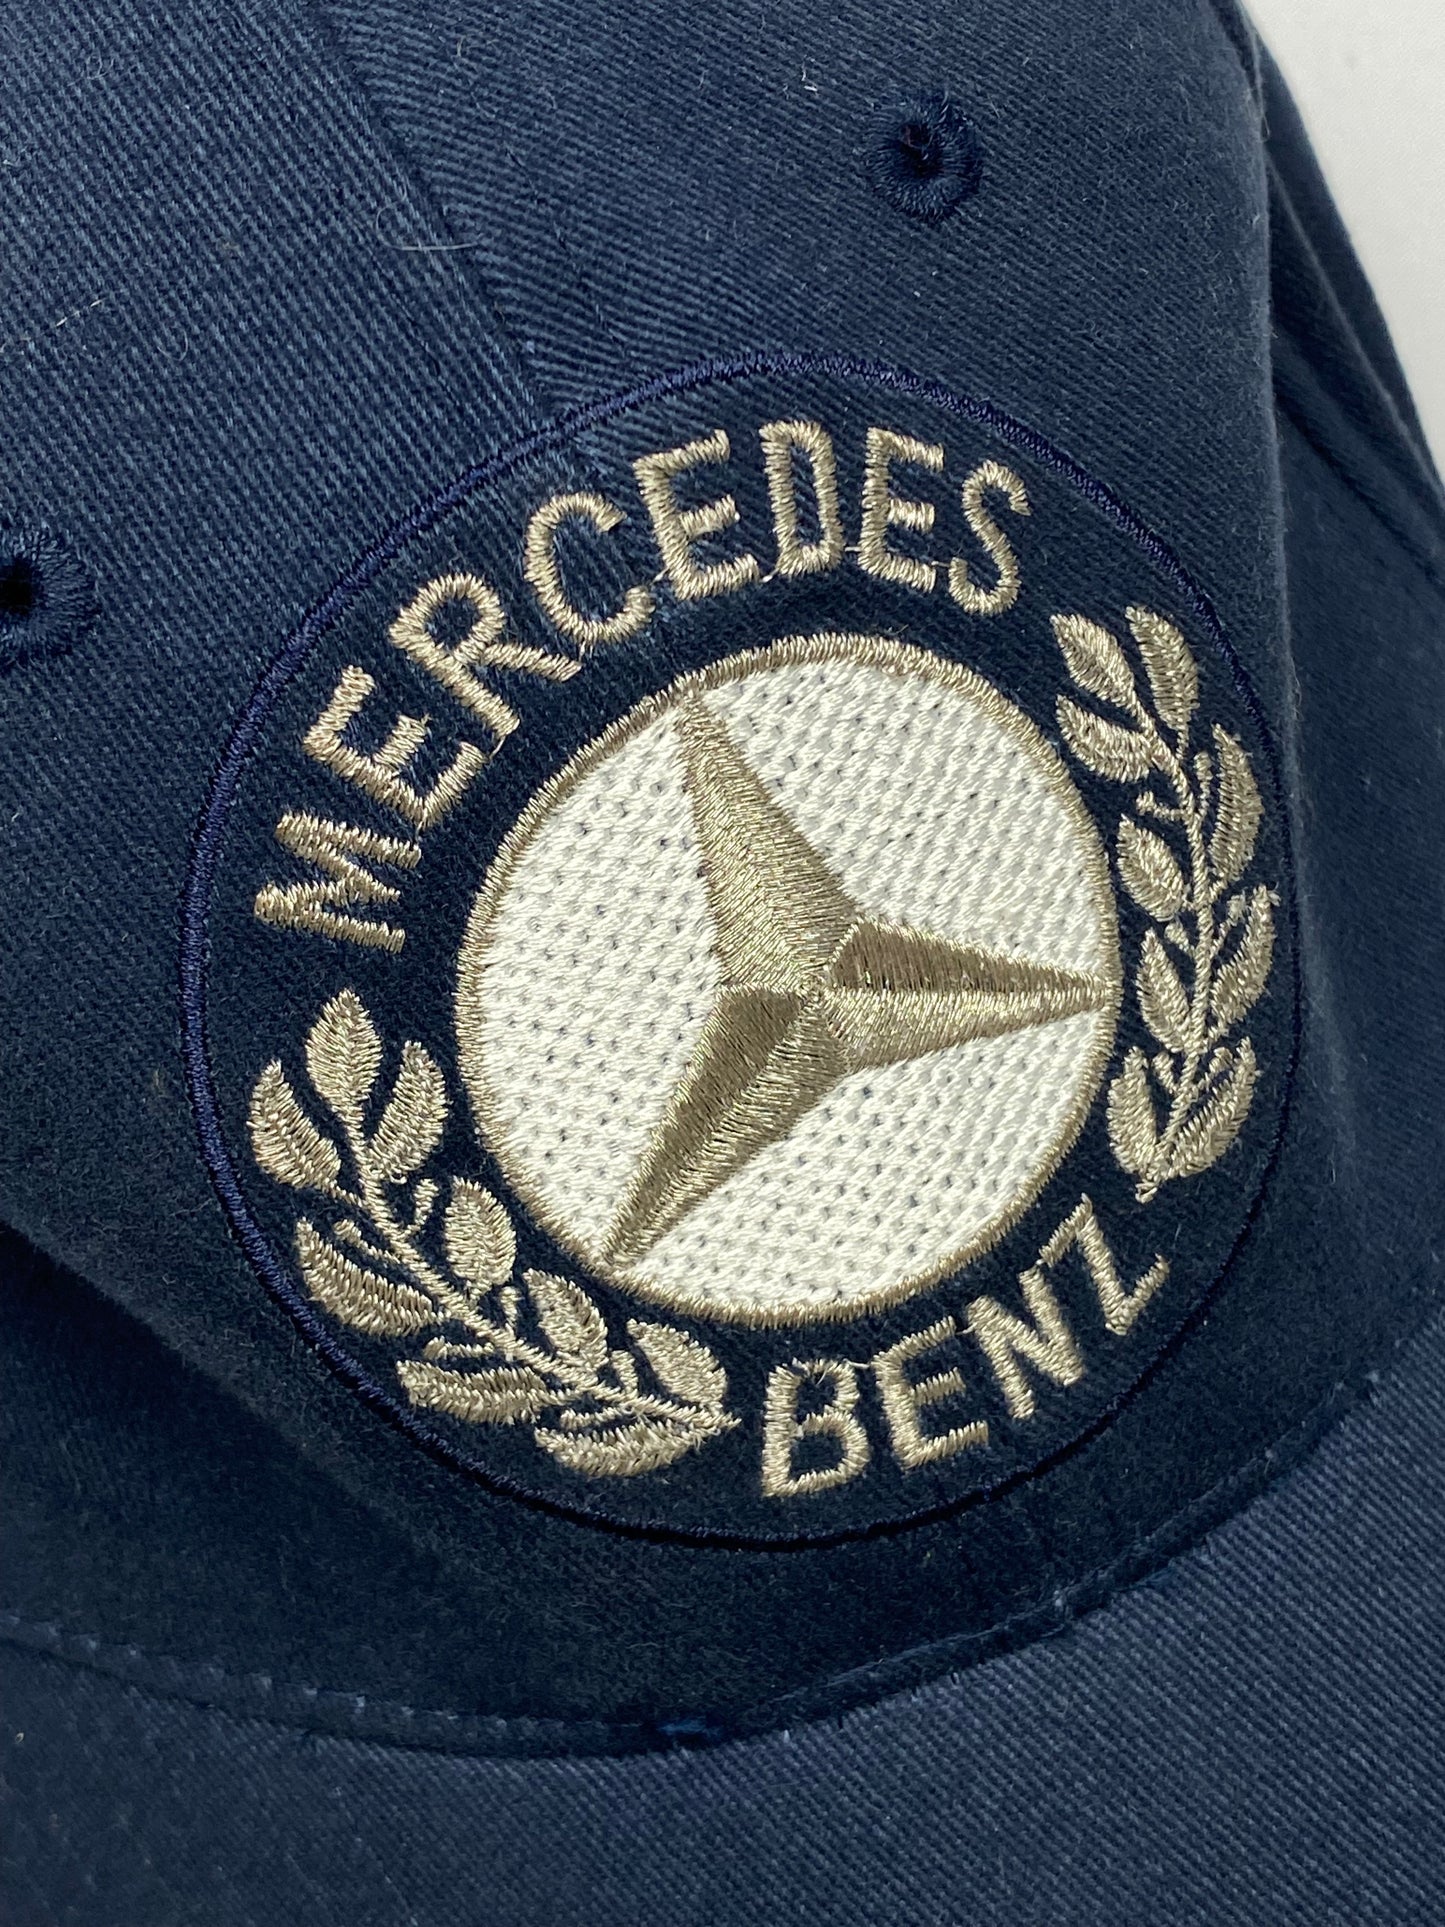 VINTAGE MERCEDES BENZ LOGO EMBROIDERY CAP.